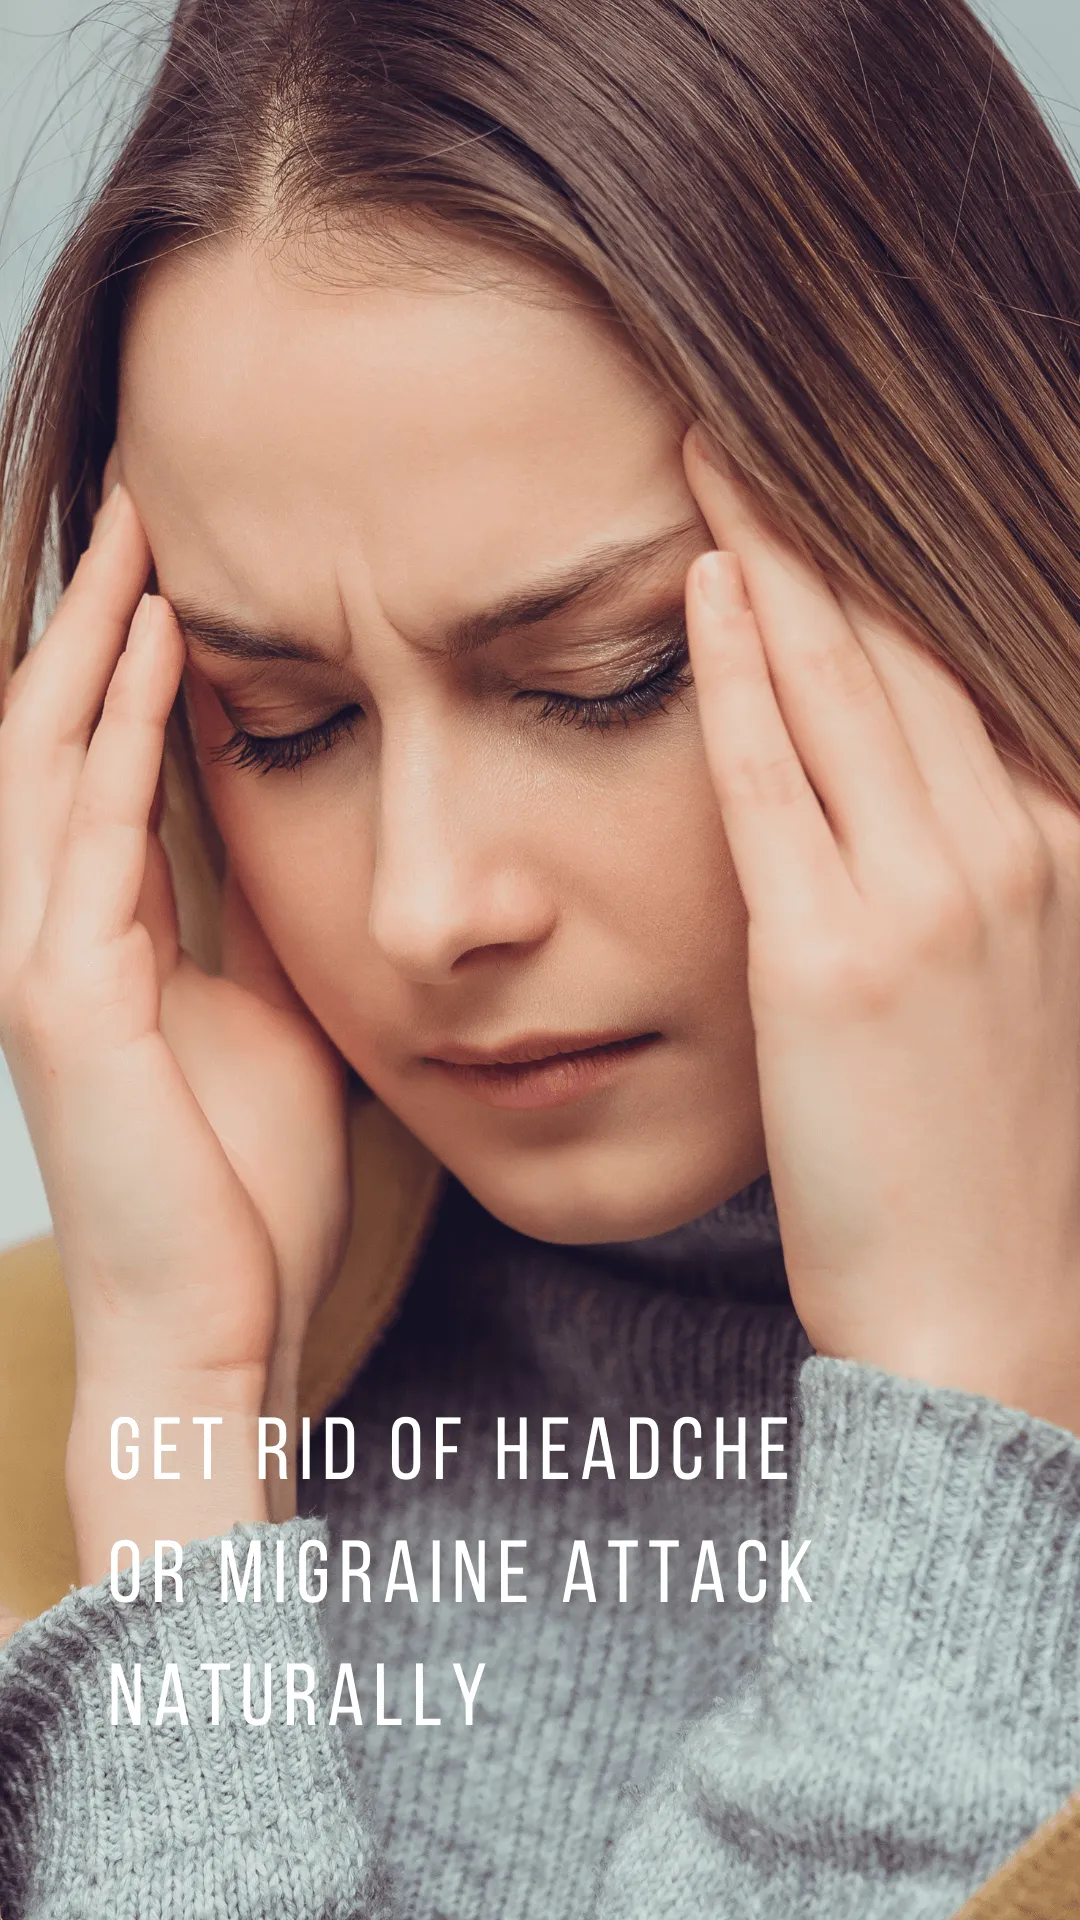 Get rid of Headache or Migraine Attack naturally